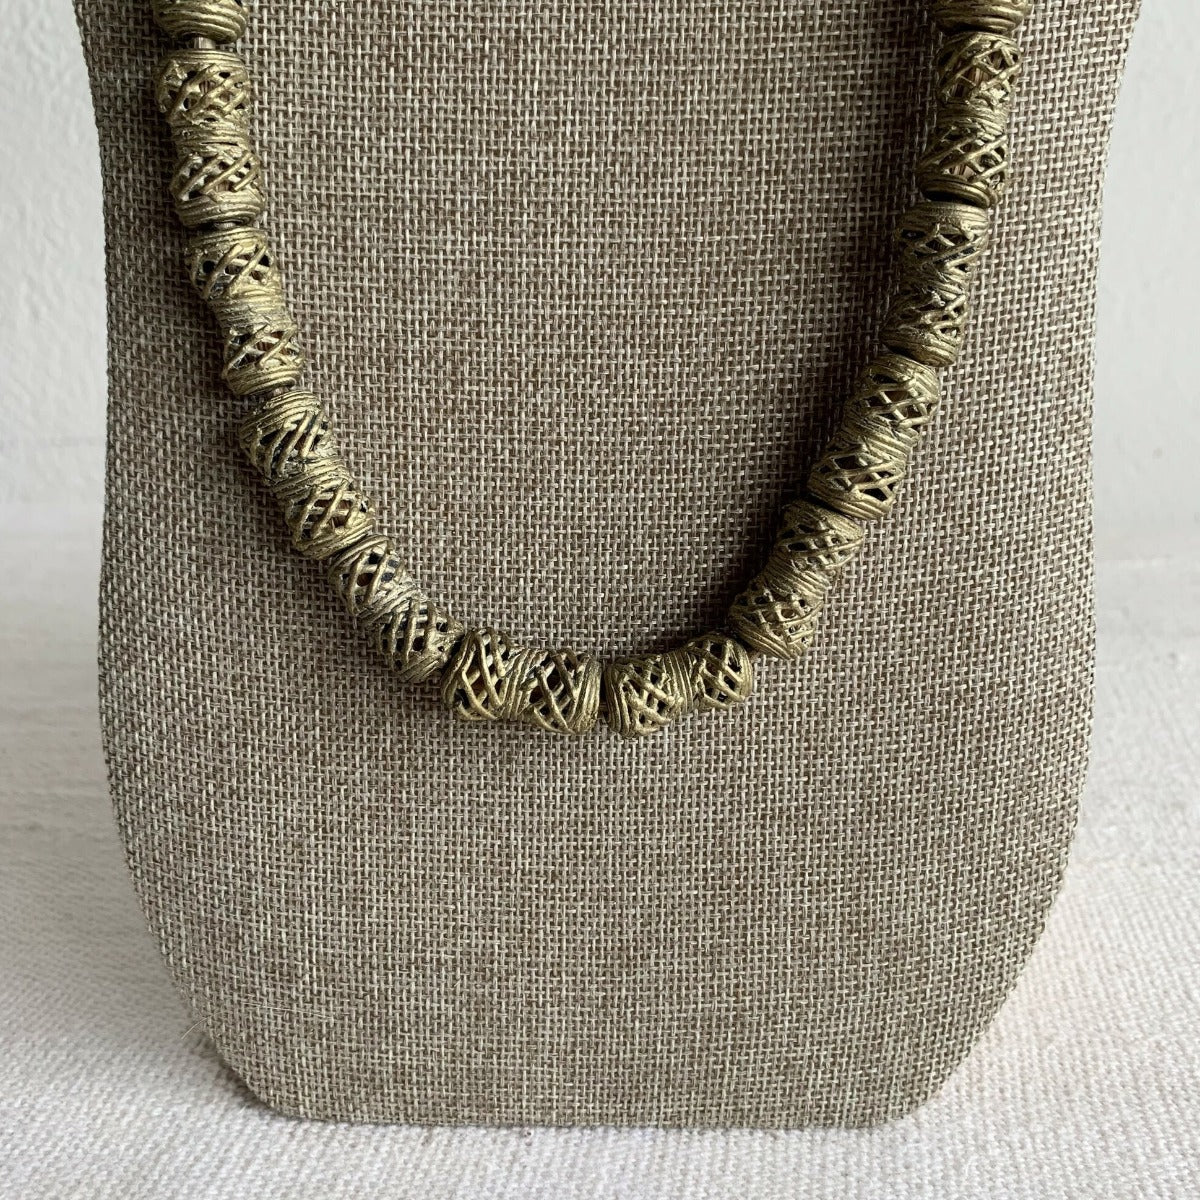 Handmade Ghanaian Brass Beaded Necklace - Small Beads 13" Farafinya African Market Farafinya African Market 